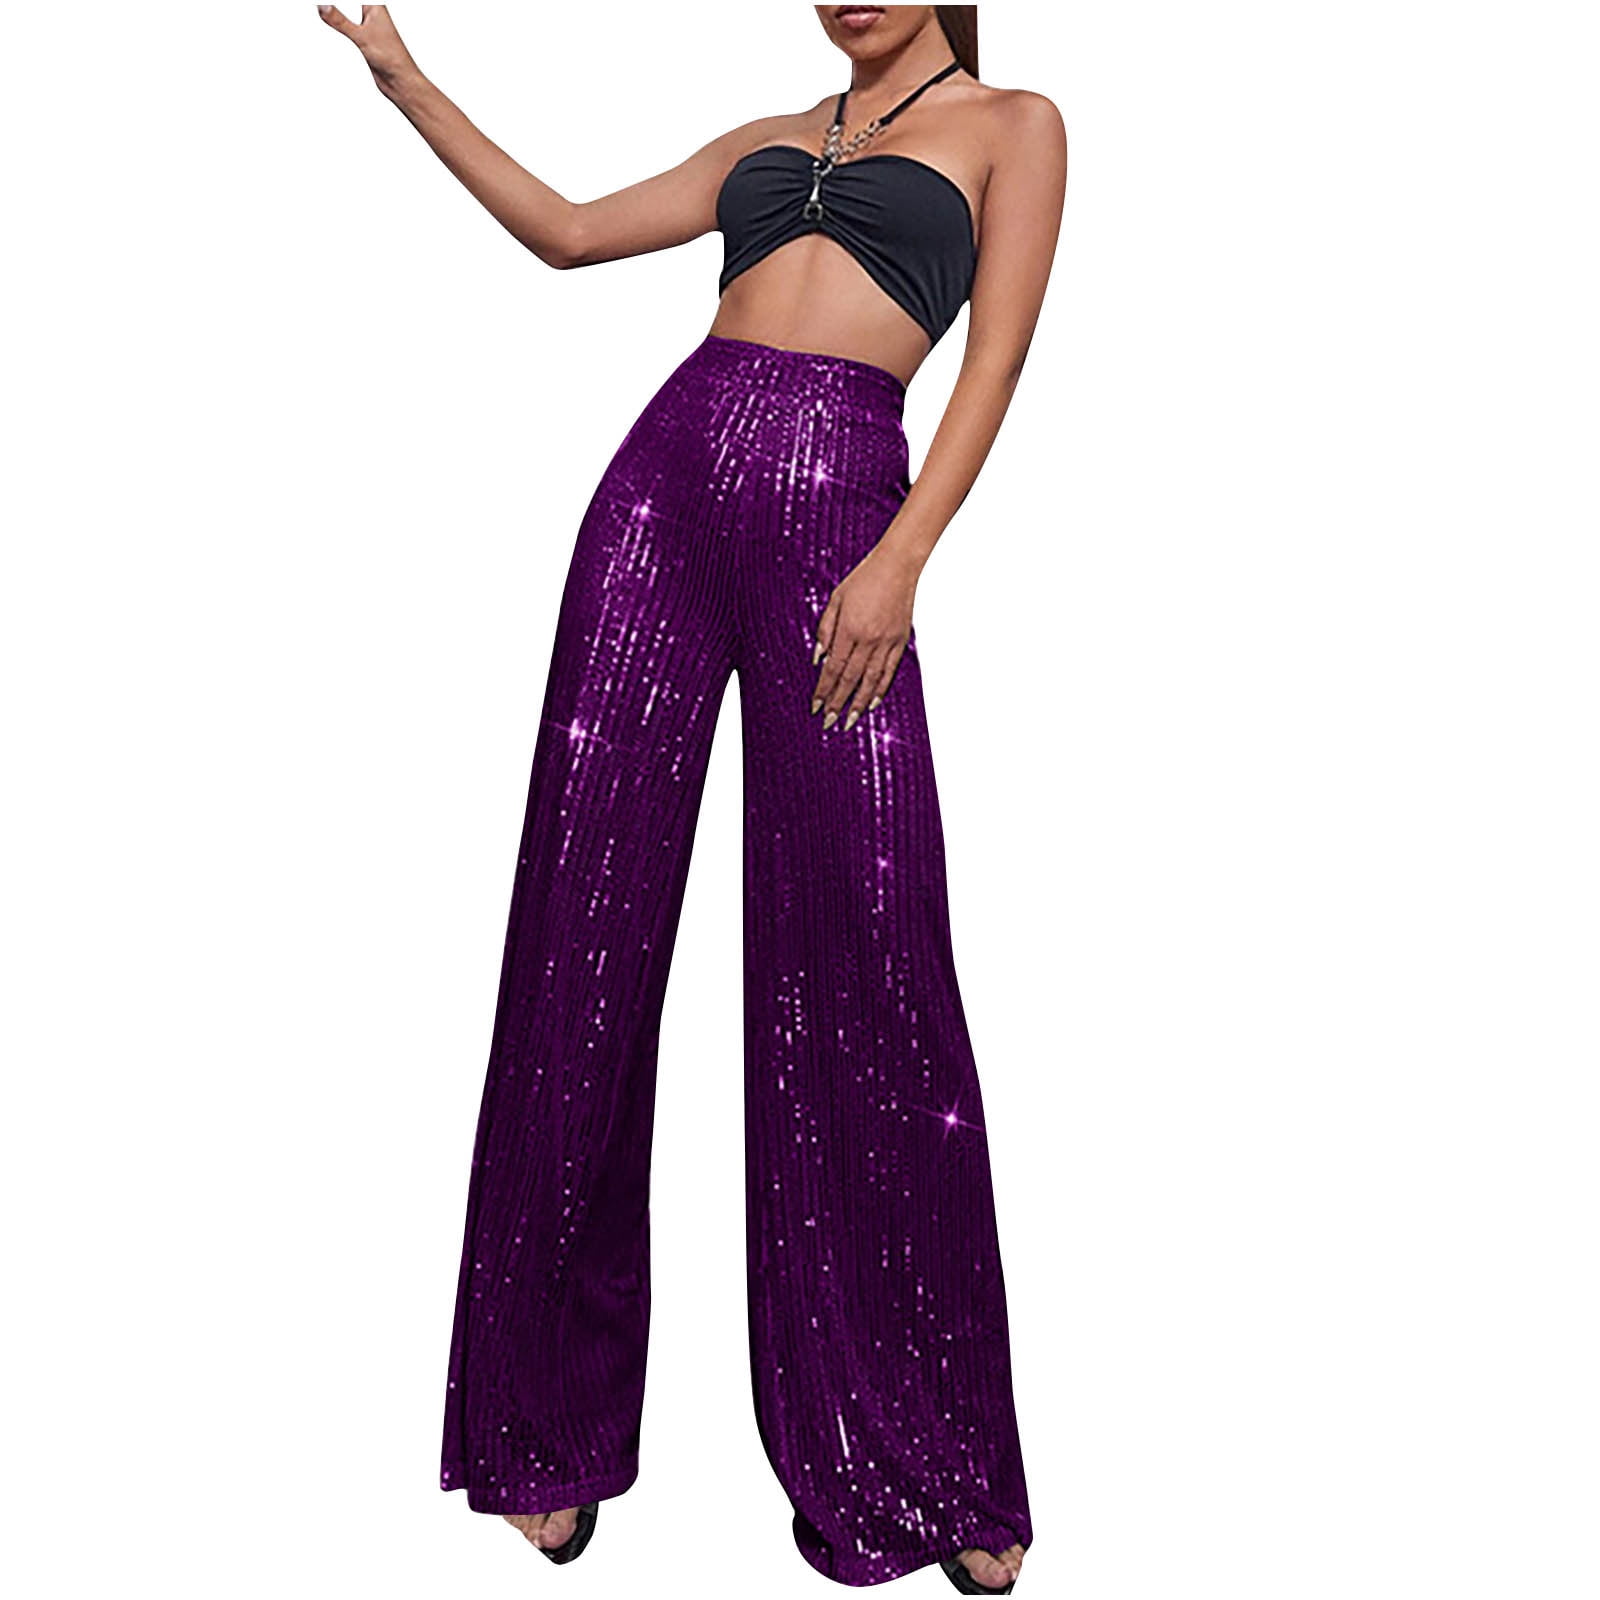 JWZUY Womens Solid Sequin Glitter Pant Bootcut Shiny Pants Full-Length  Elastic Waist Pant Purple XXL 